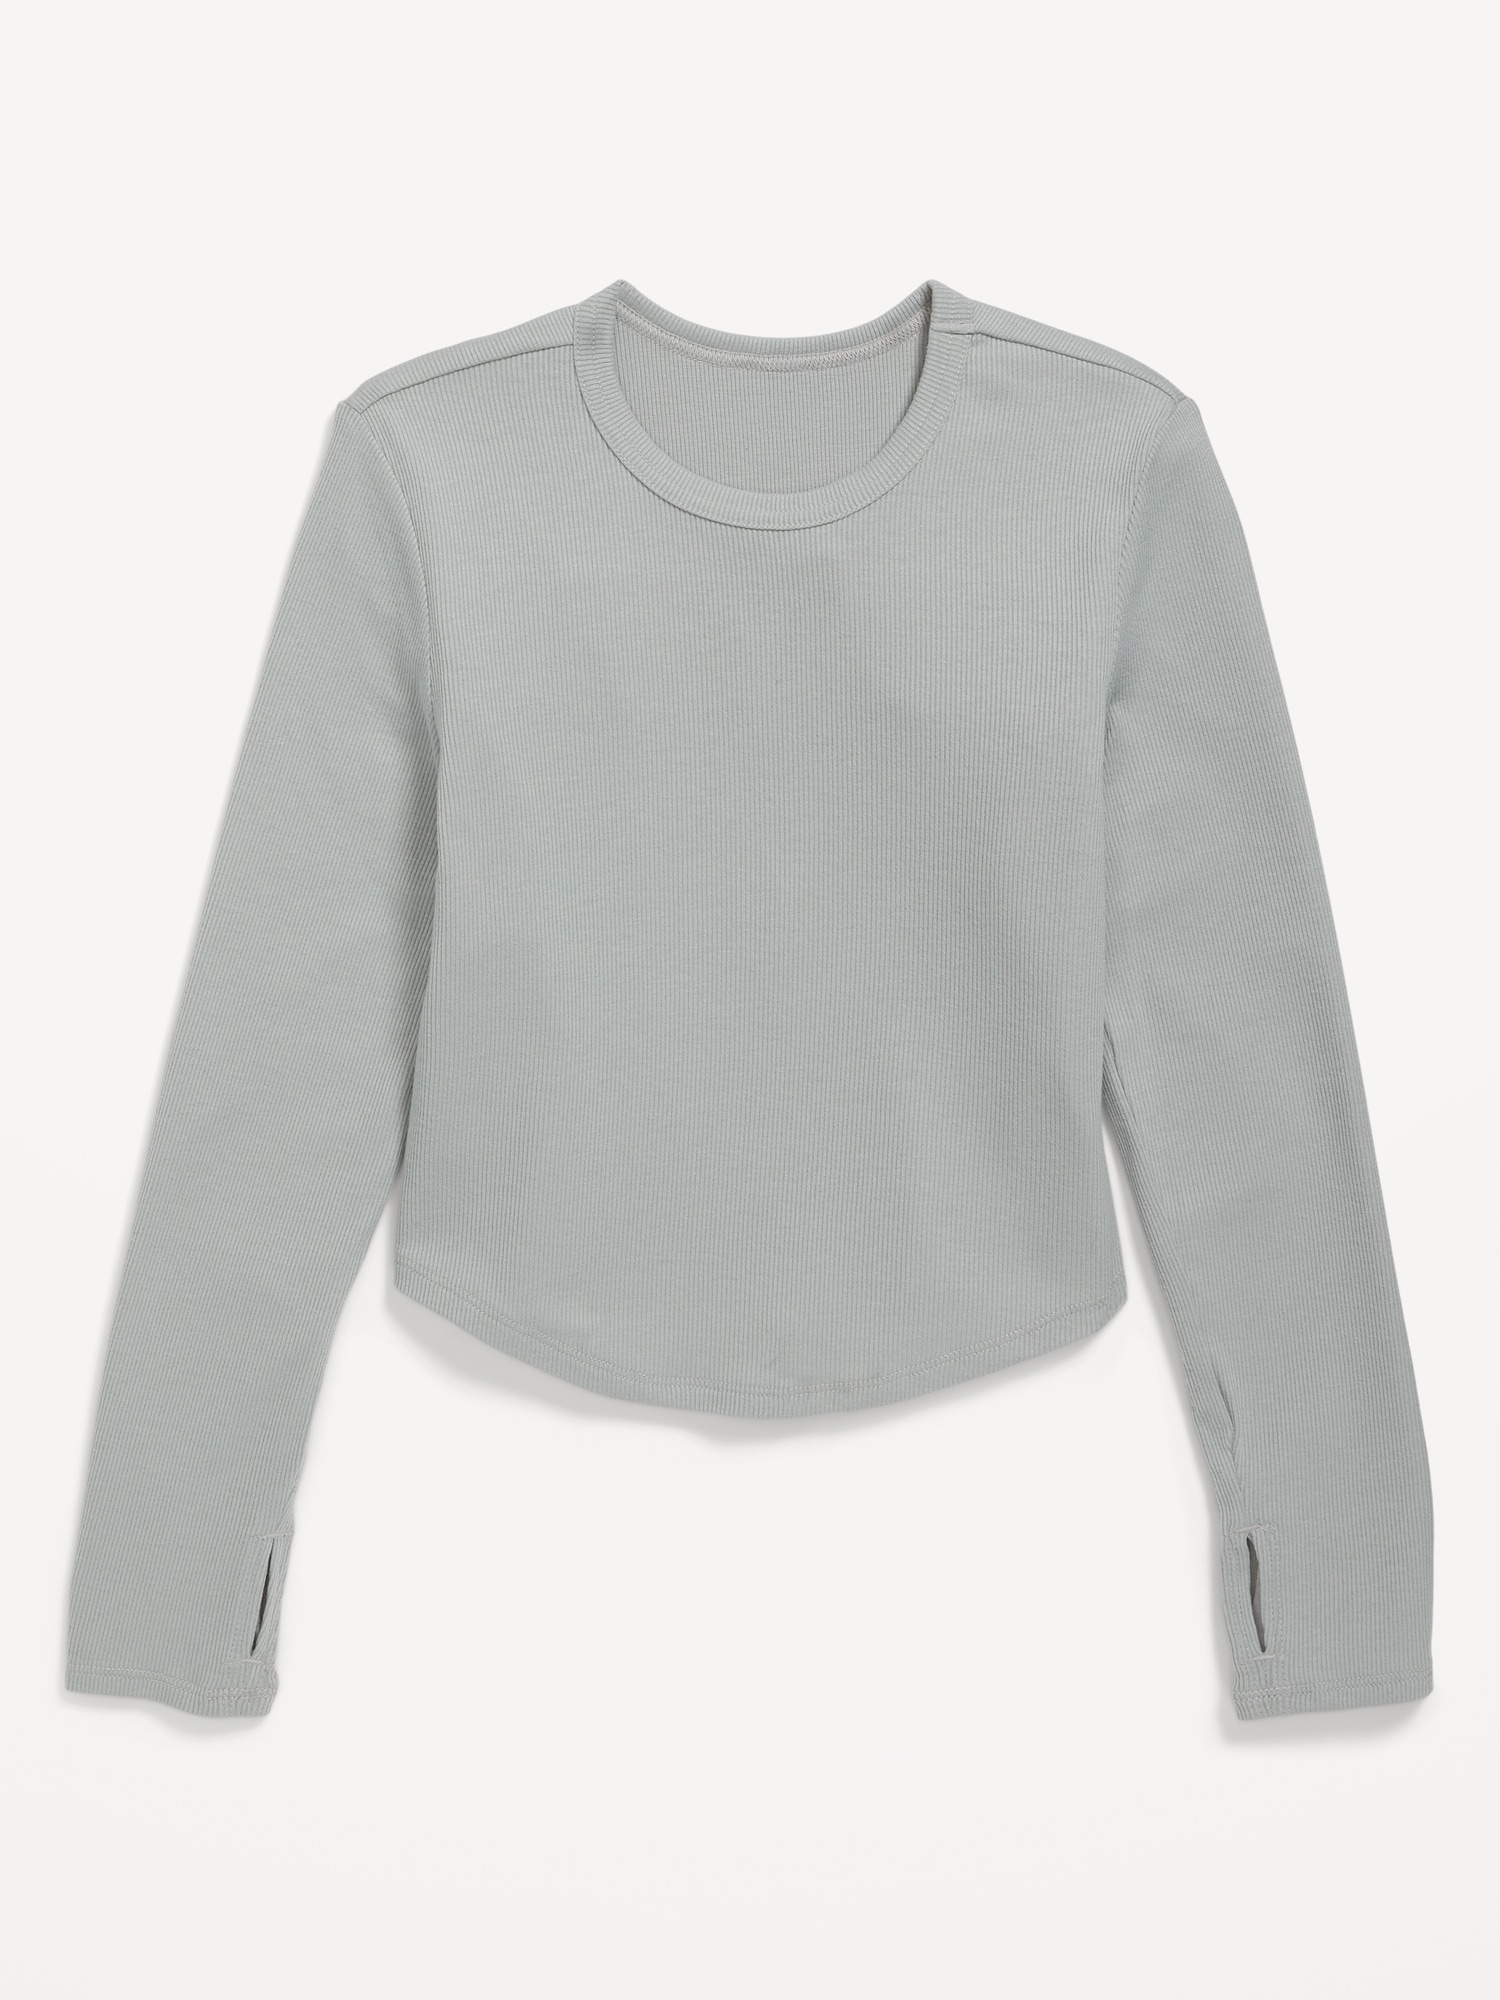 UltraLite Long-Sleeve Rib-Knit T-Shirt for Girls | Old Navy